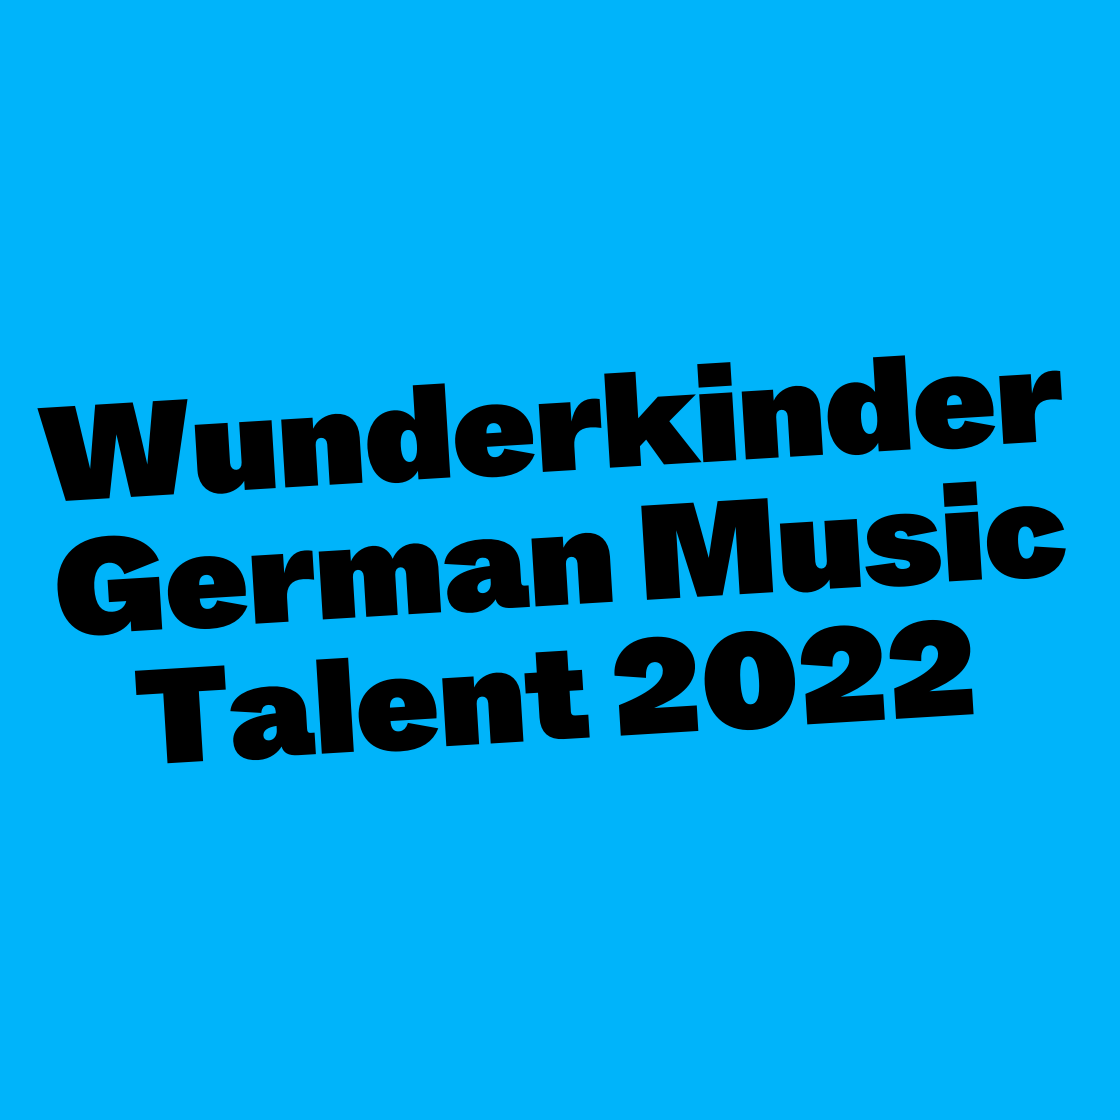 Wunderkinder German Music Talent 2022